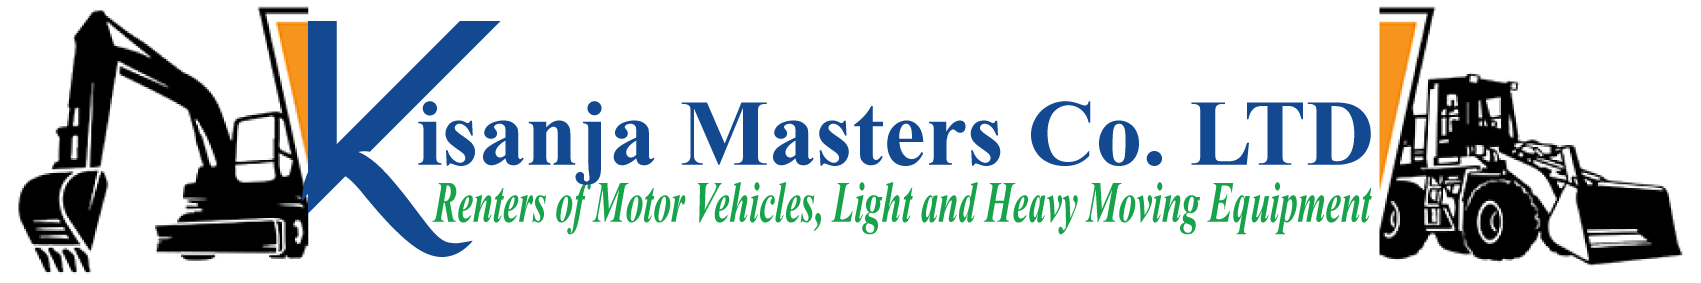 Kisanja Masters Co. Ltd